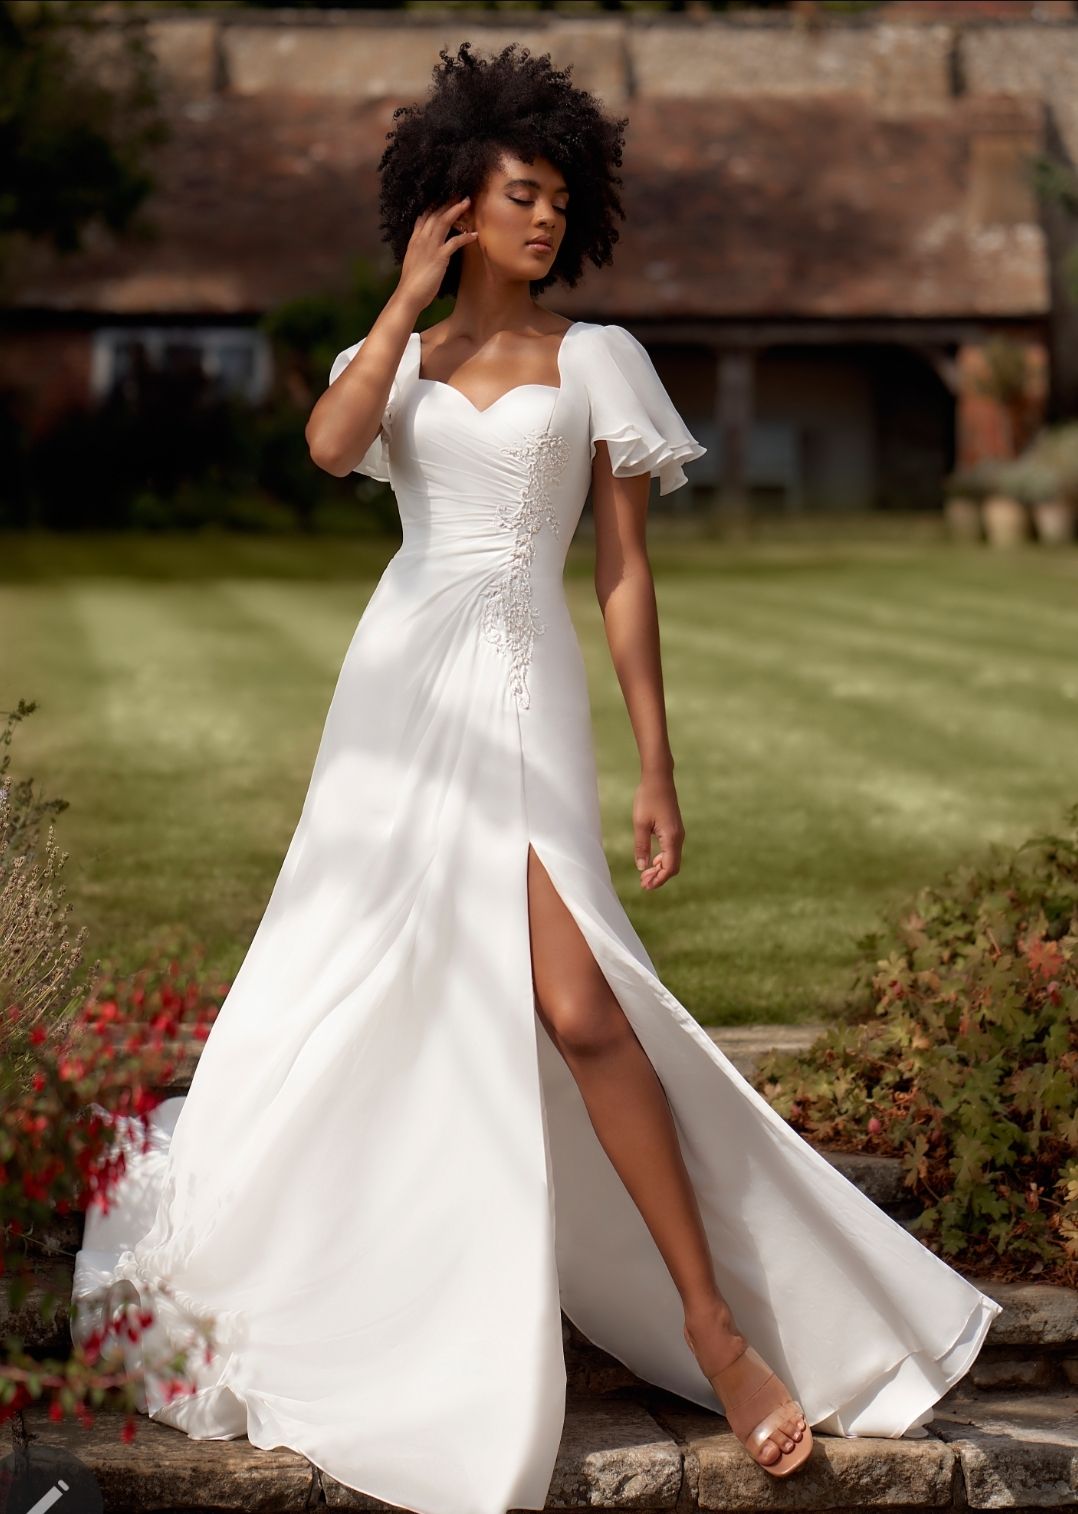 Best Dress 2 Impress Bridal-Image-26